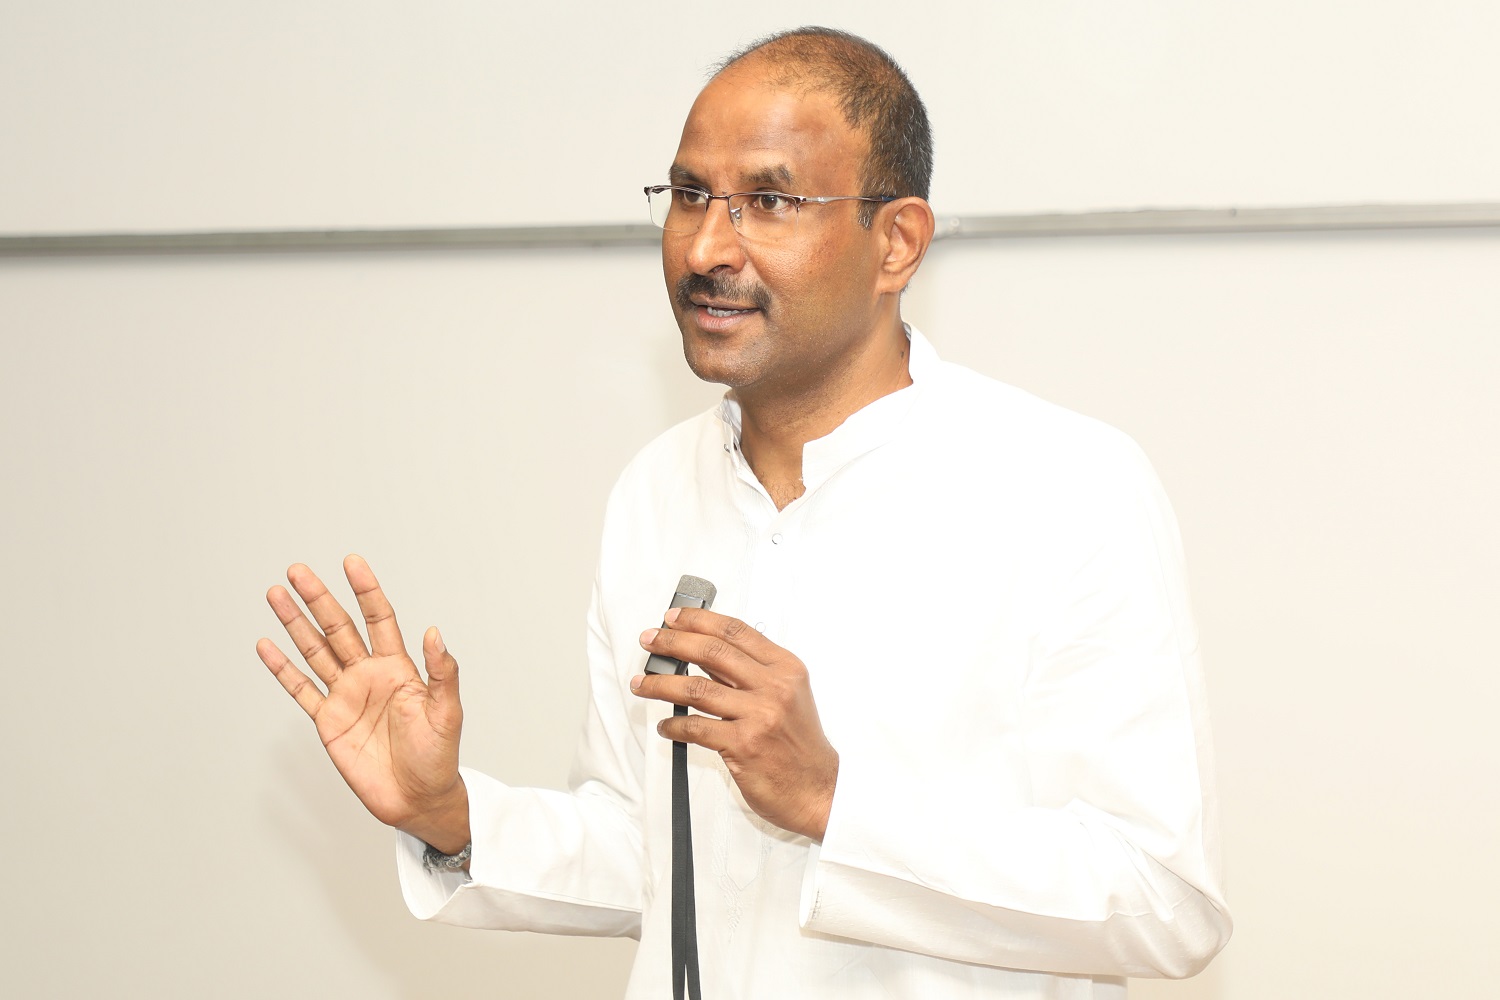 Rangaraj Sriramulu, Business Leader and Digital Evangelist, delivers the keynote address.